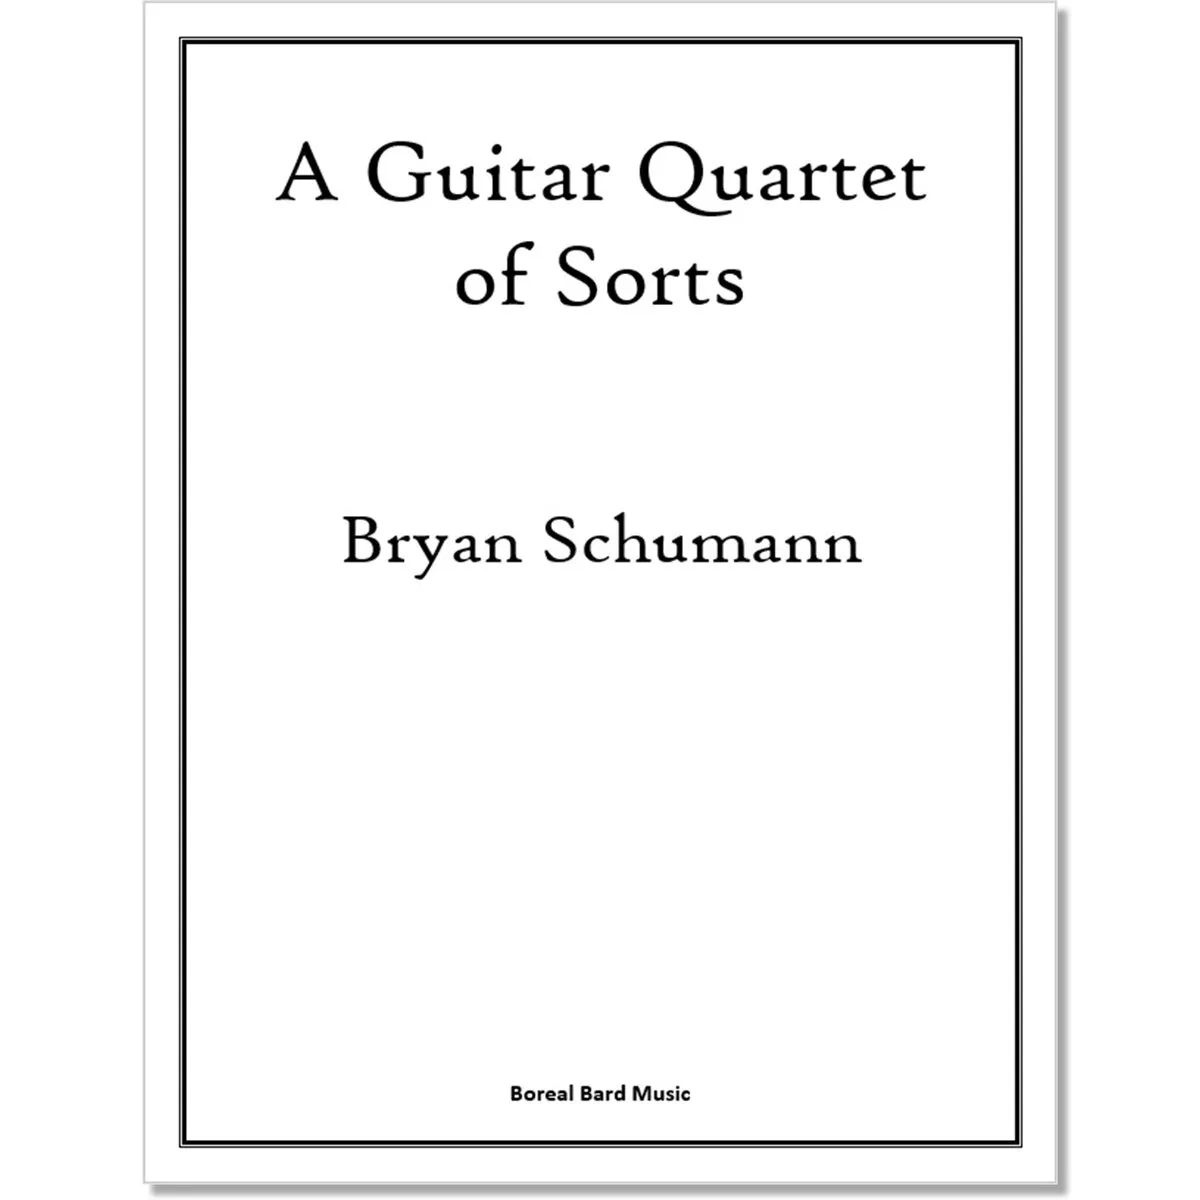 A Guitar Quartet of Sorts (sheet music)